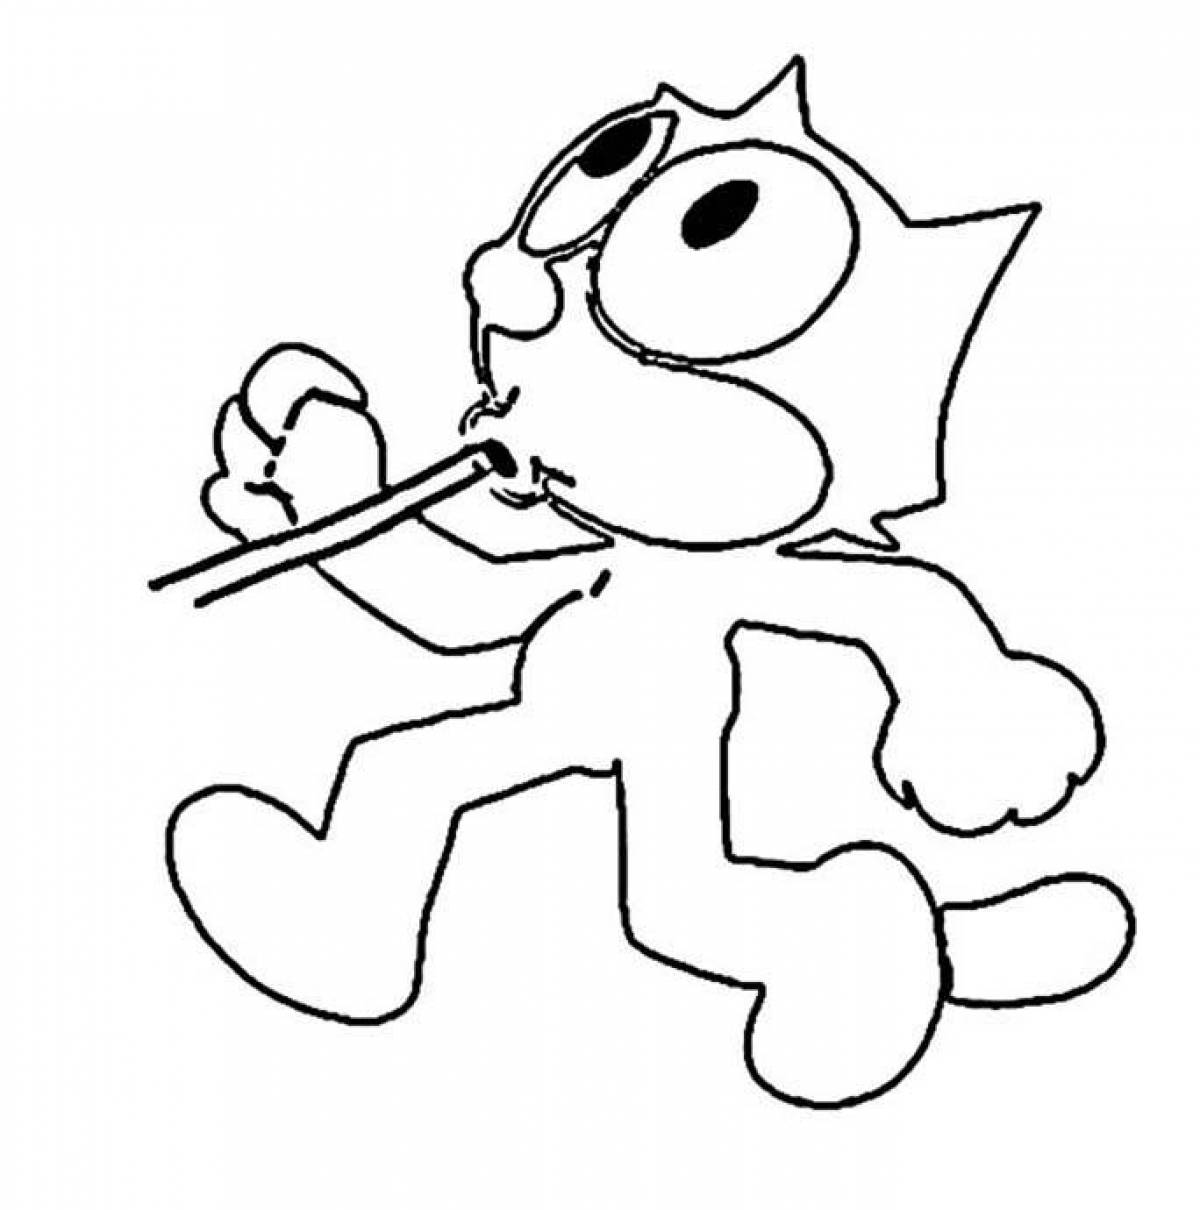 Adorable cartoon cat coloring book